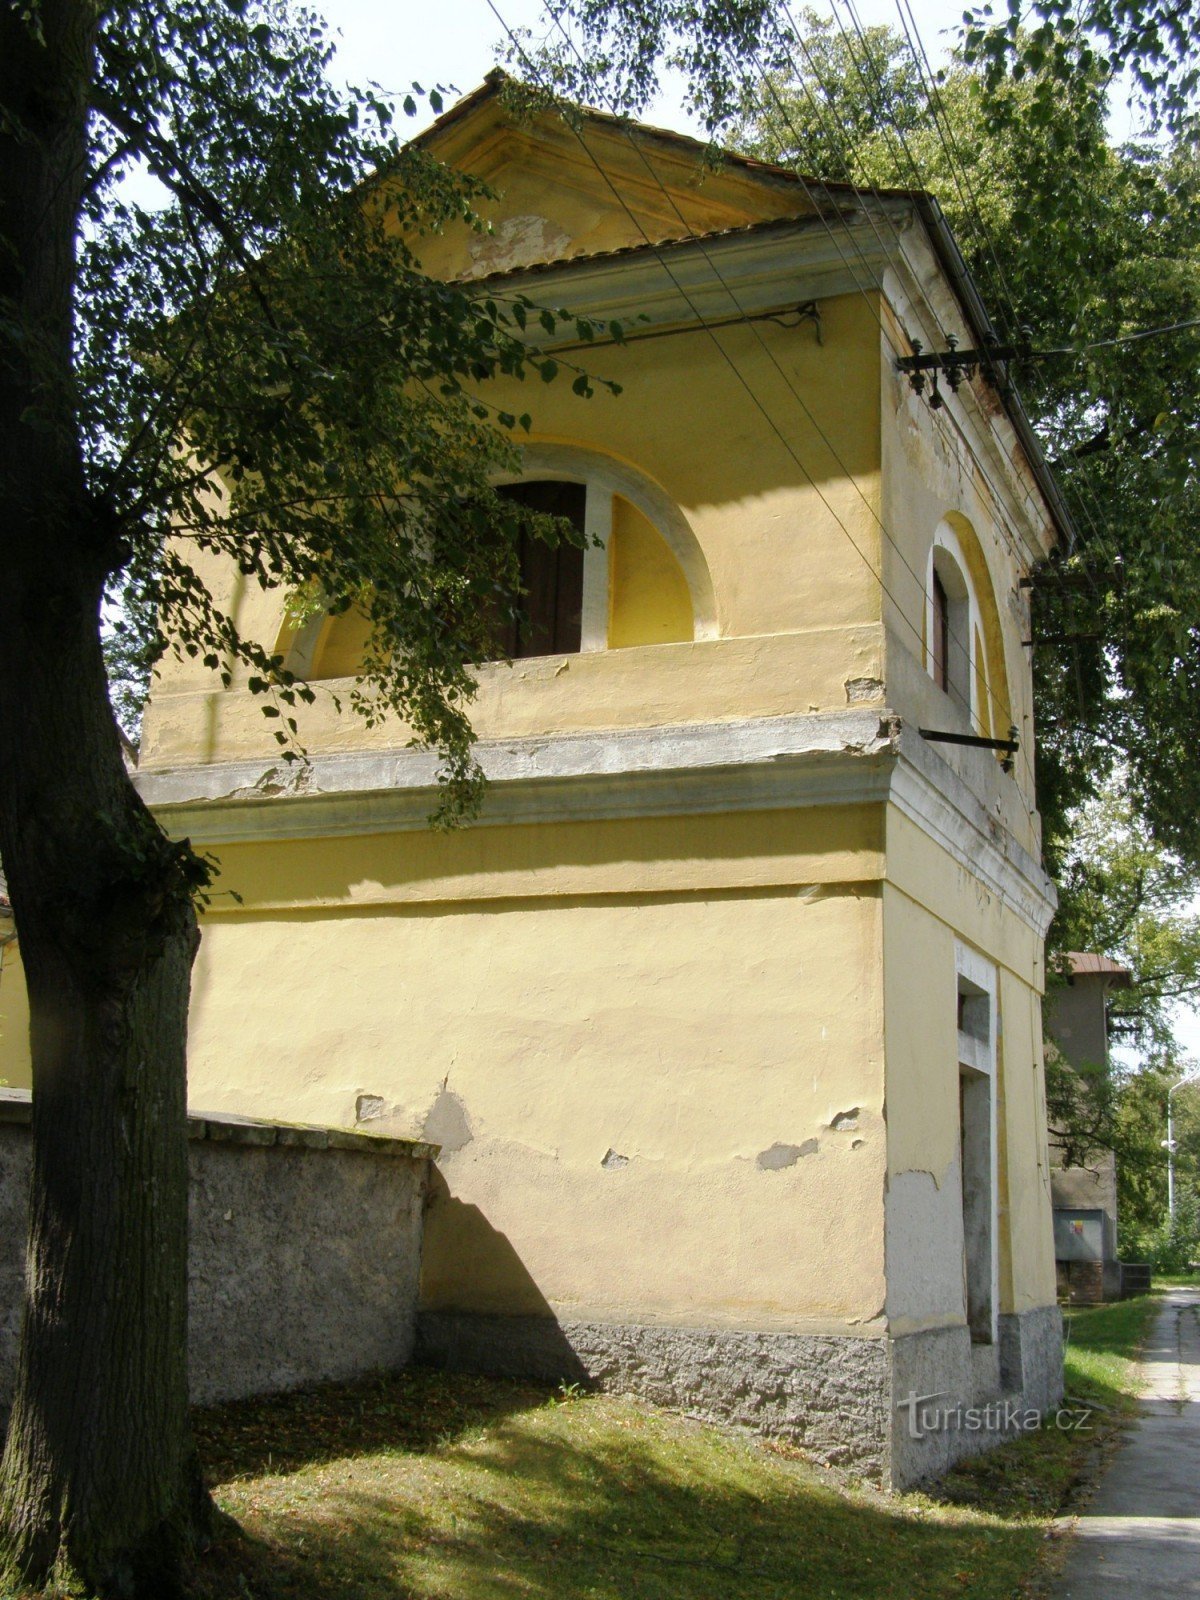 Záhornice - igreja de St. Mateus